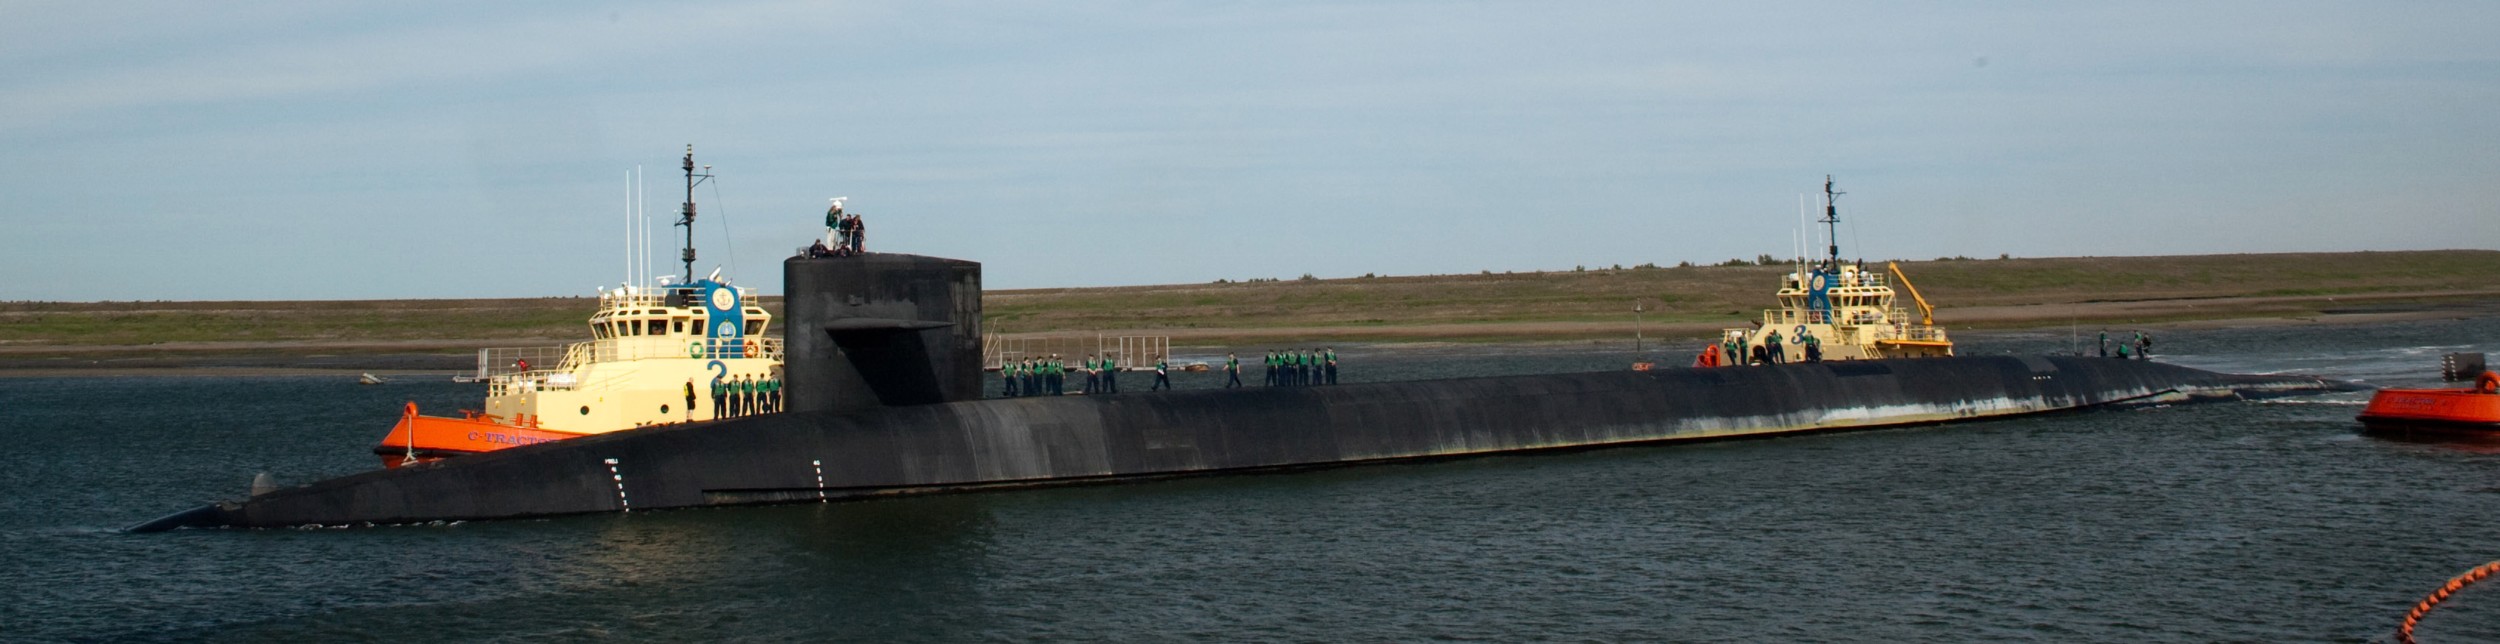 ssbn-732 uss alaska ohio class ballistic missile submarine 2011 08